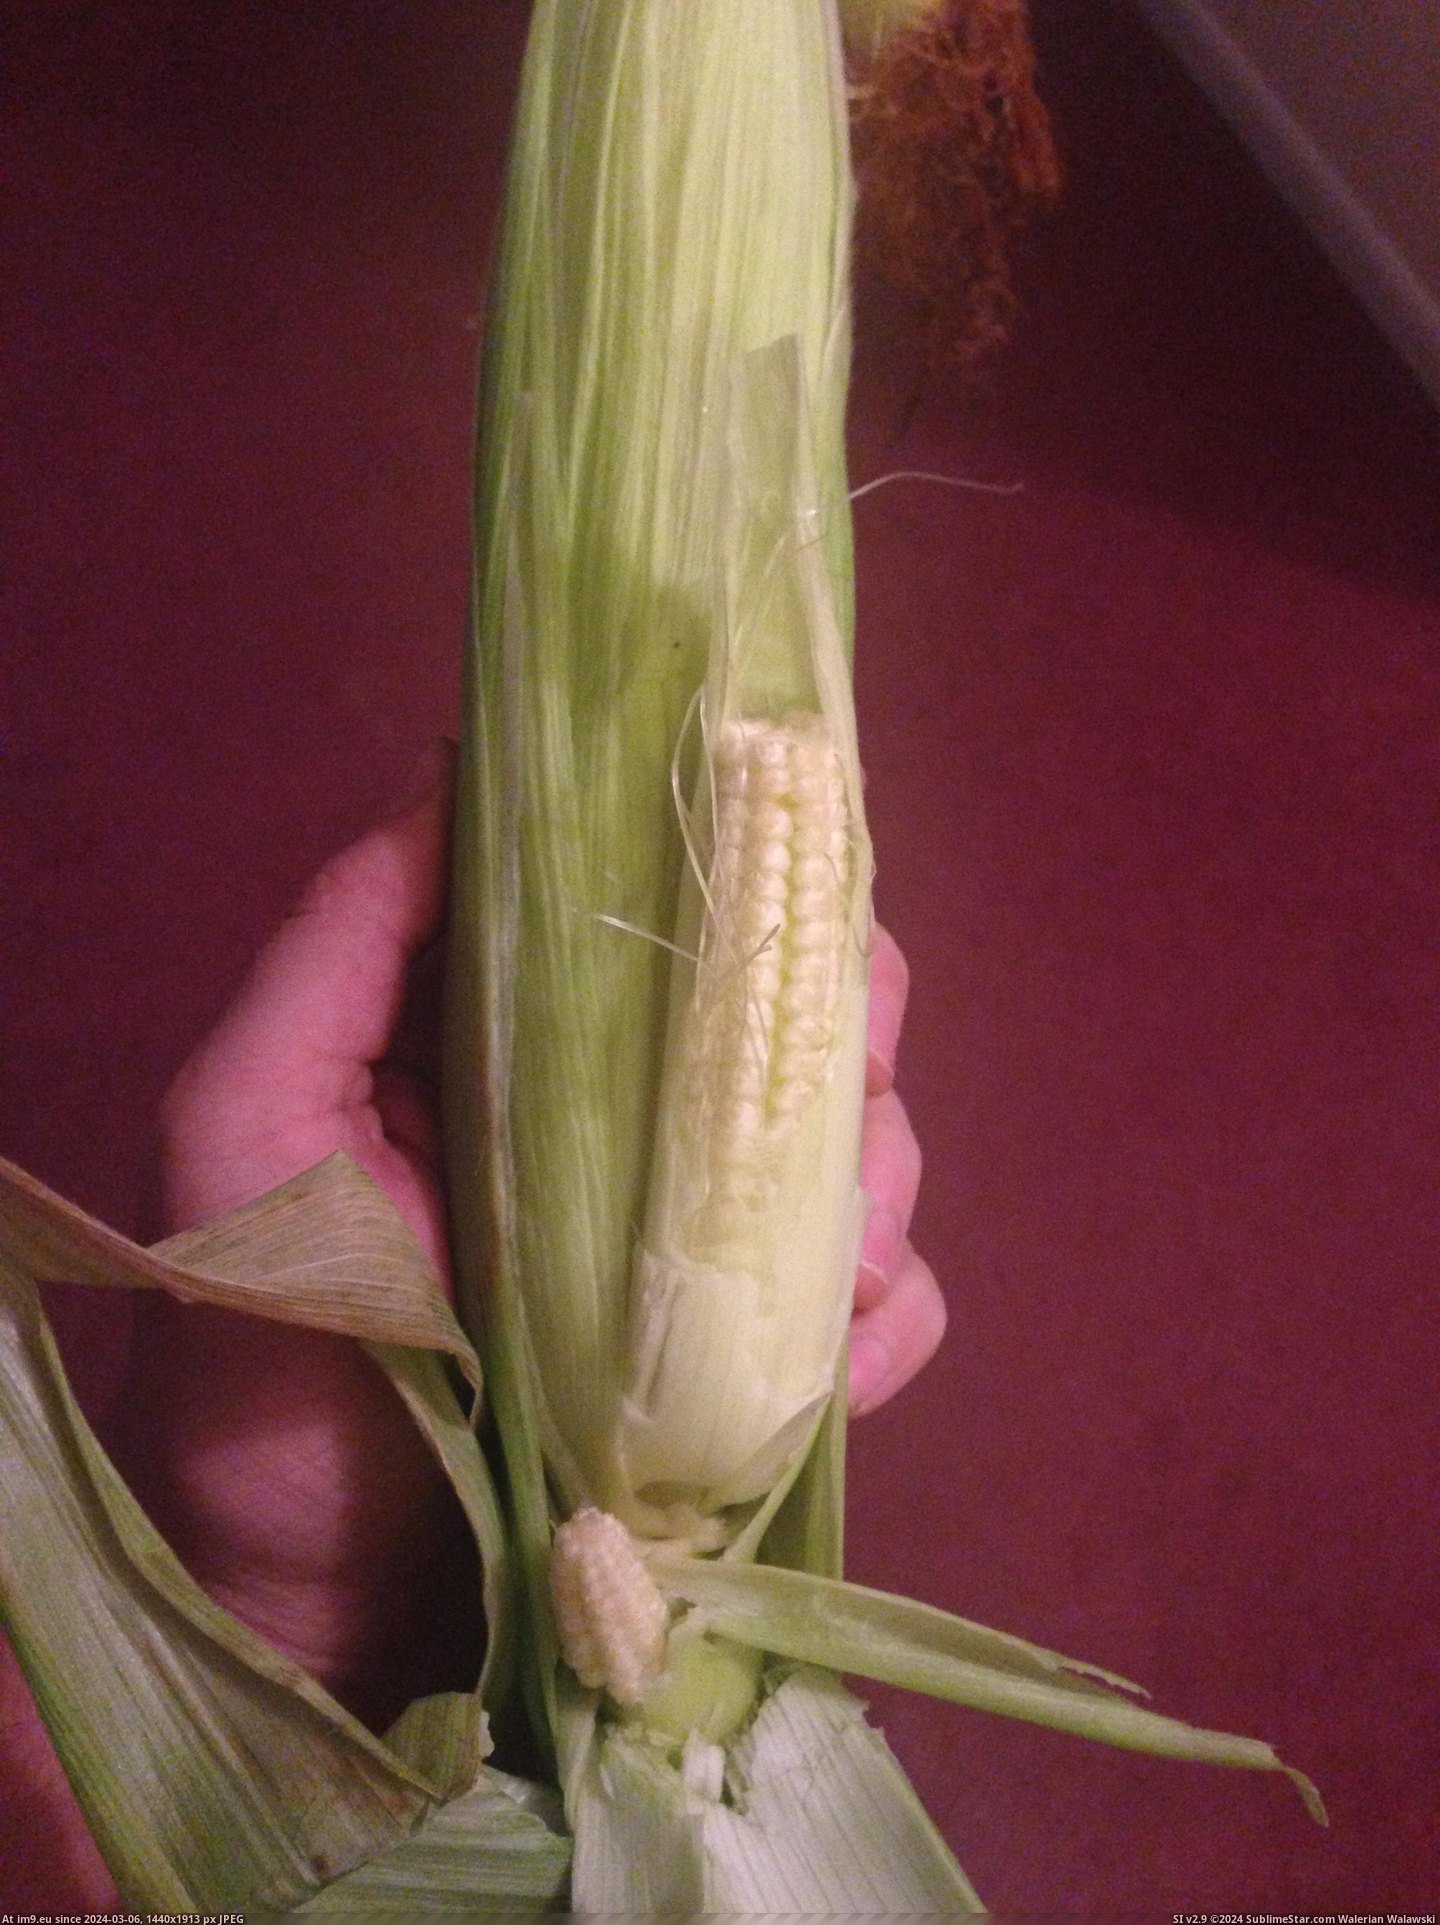 #Had #Smaller #Corn #Growing [Mildlyinteresting] My corn had a smaller and smaller corn growing inside it Pic. (Bild von album My r/MILDLYINTERESTING favs))